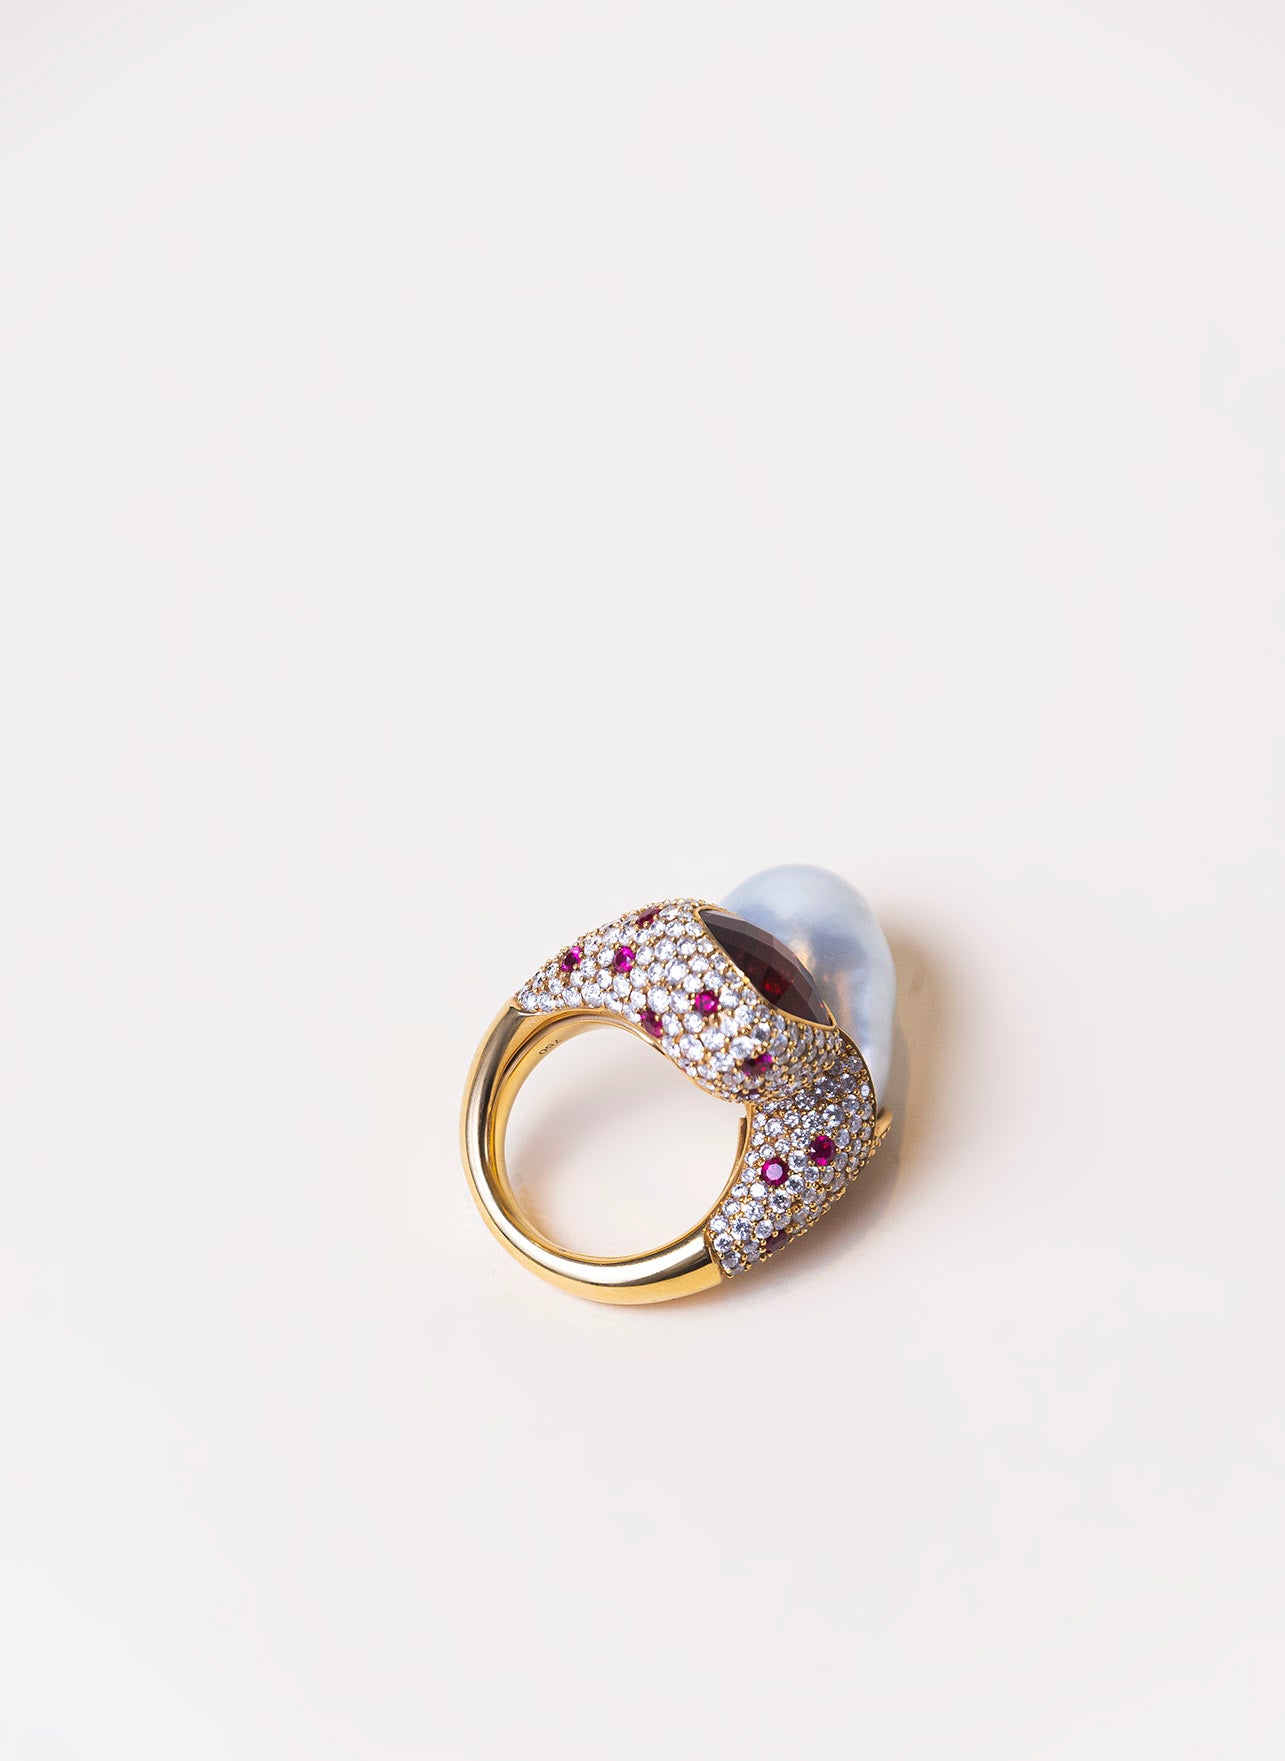 Dolce Far Niente Australian Pearl and Rhodolite Ring